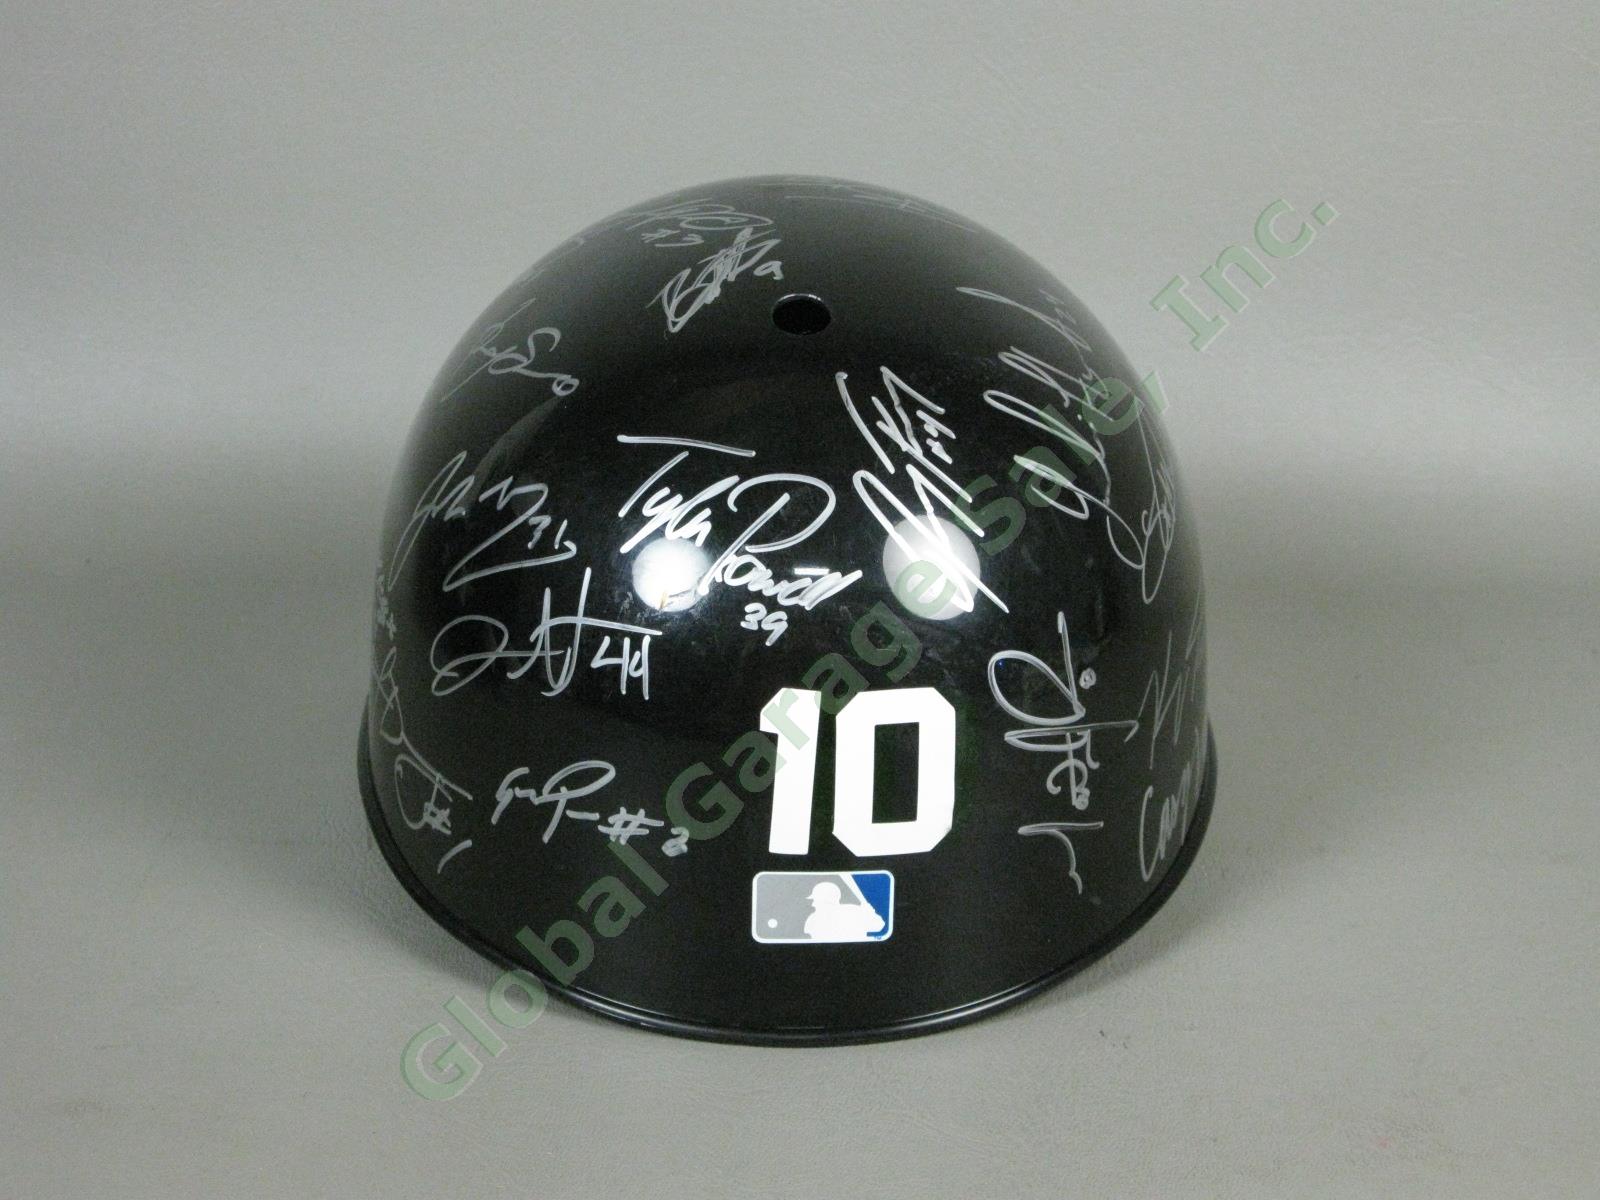 2010 Auburn Doubledays Team Signed Baseball Helmet NYPL Toronto Blue Jays NR 2